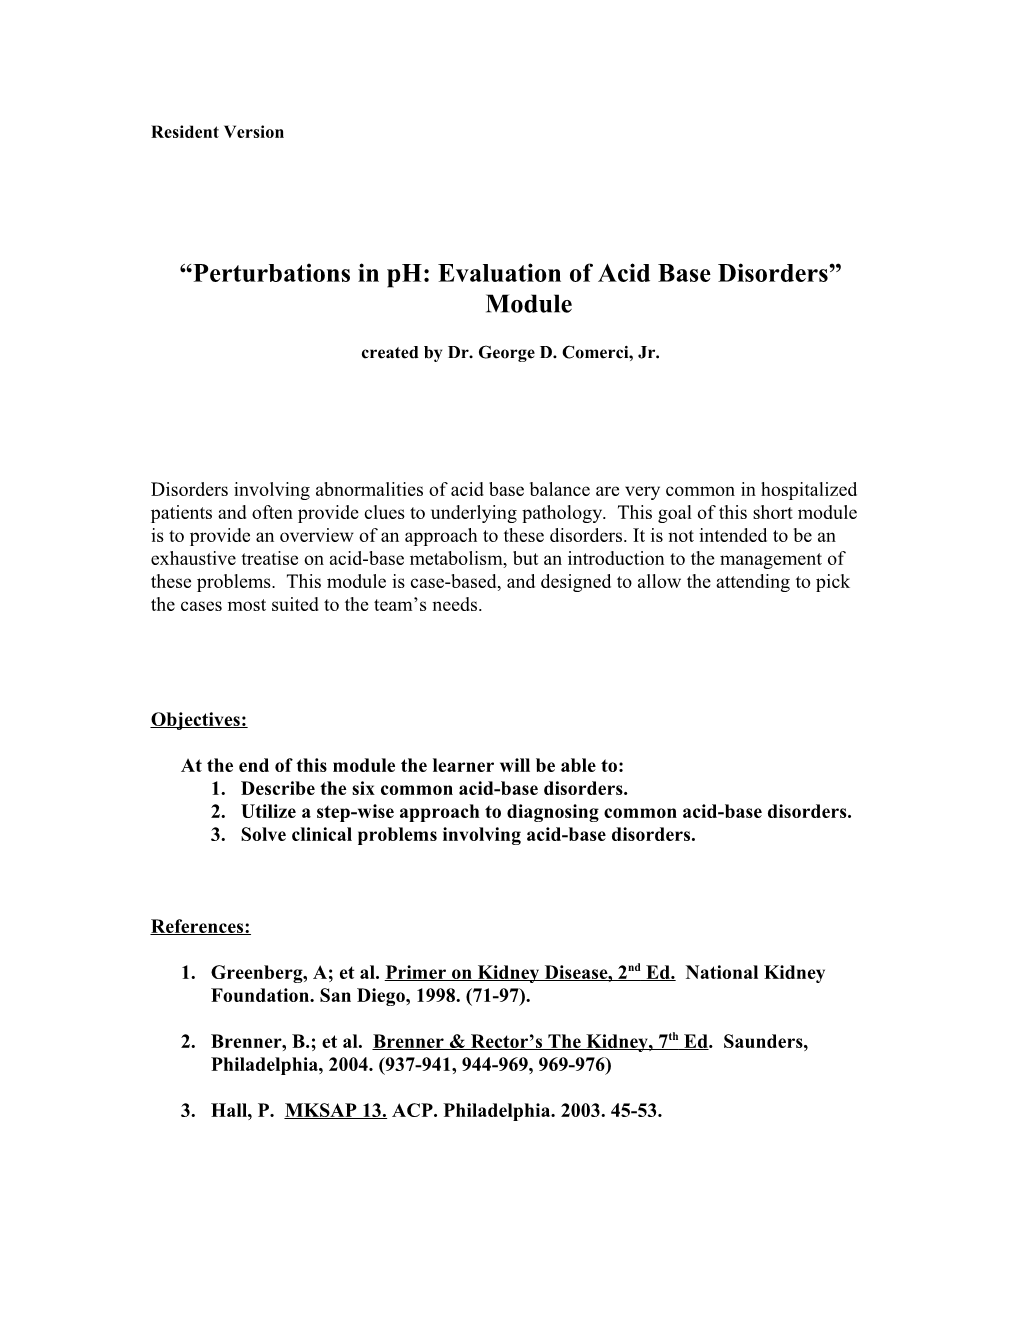 Module: Perturbations in Ph: Evaluation of Acid Base Disorders